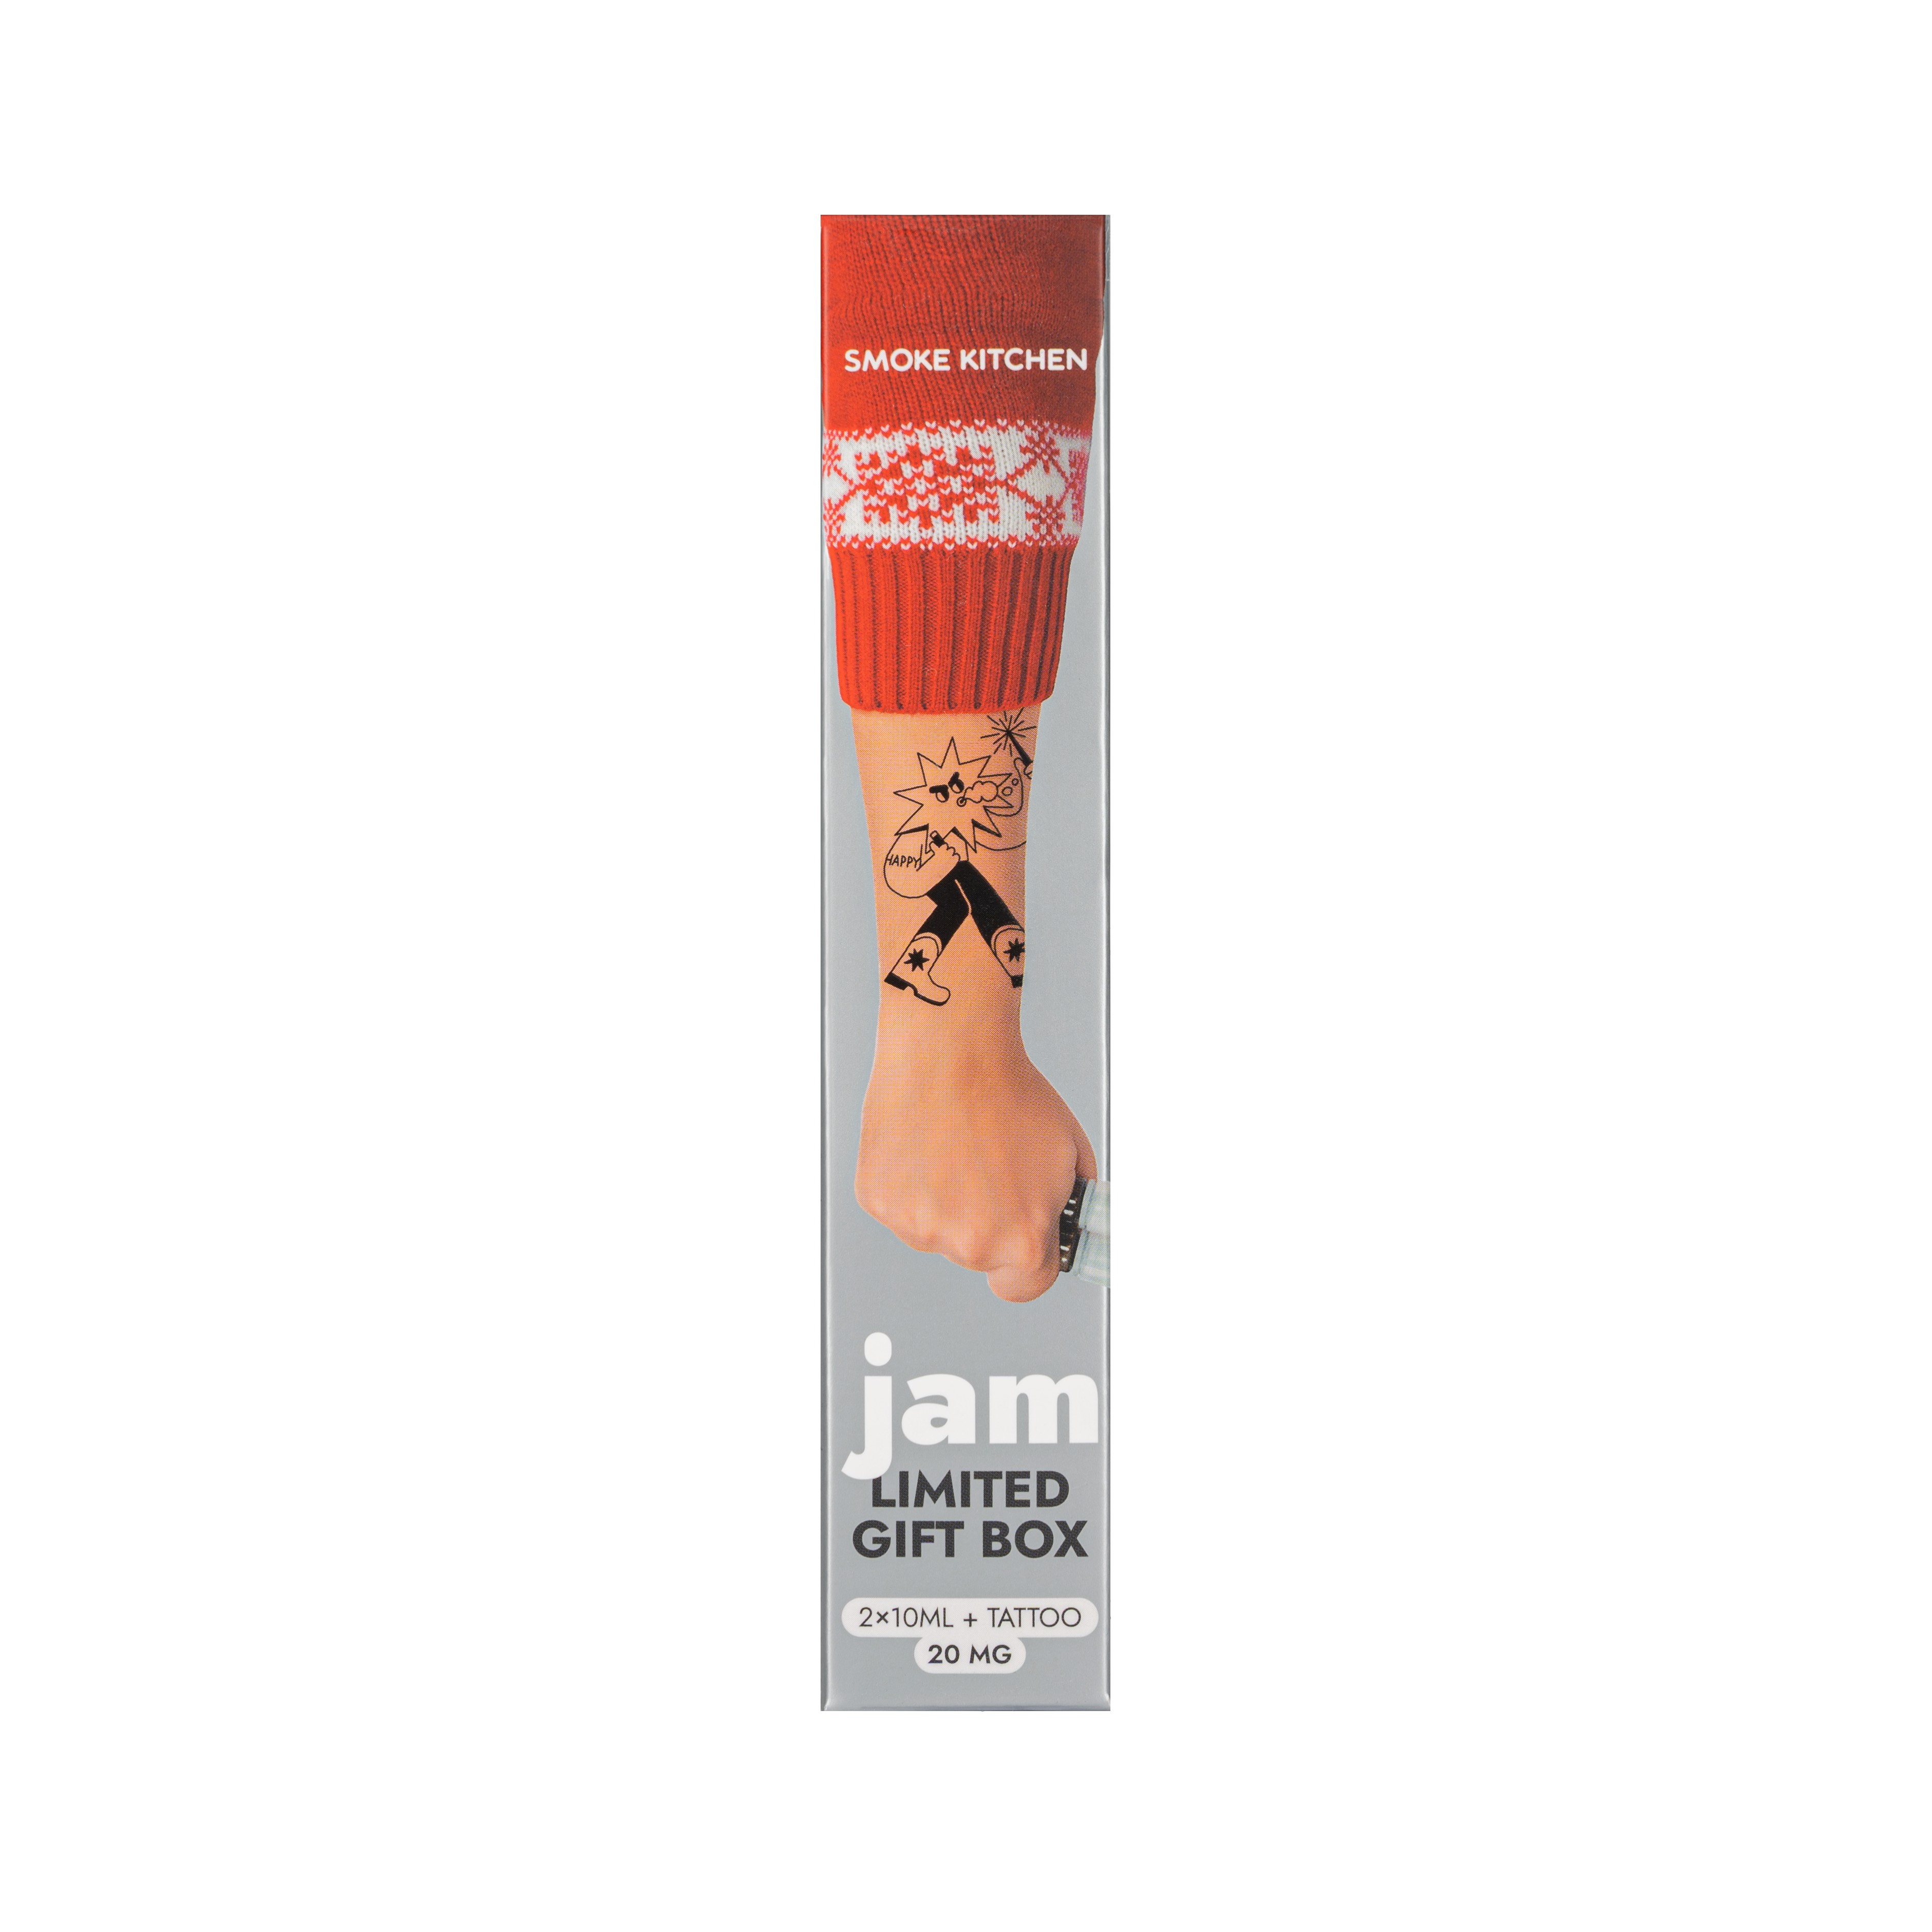 Жидкость - Smoke Kitchen - Jam - Gift Box - salt - 2 x 10 ml